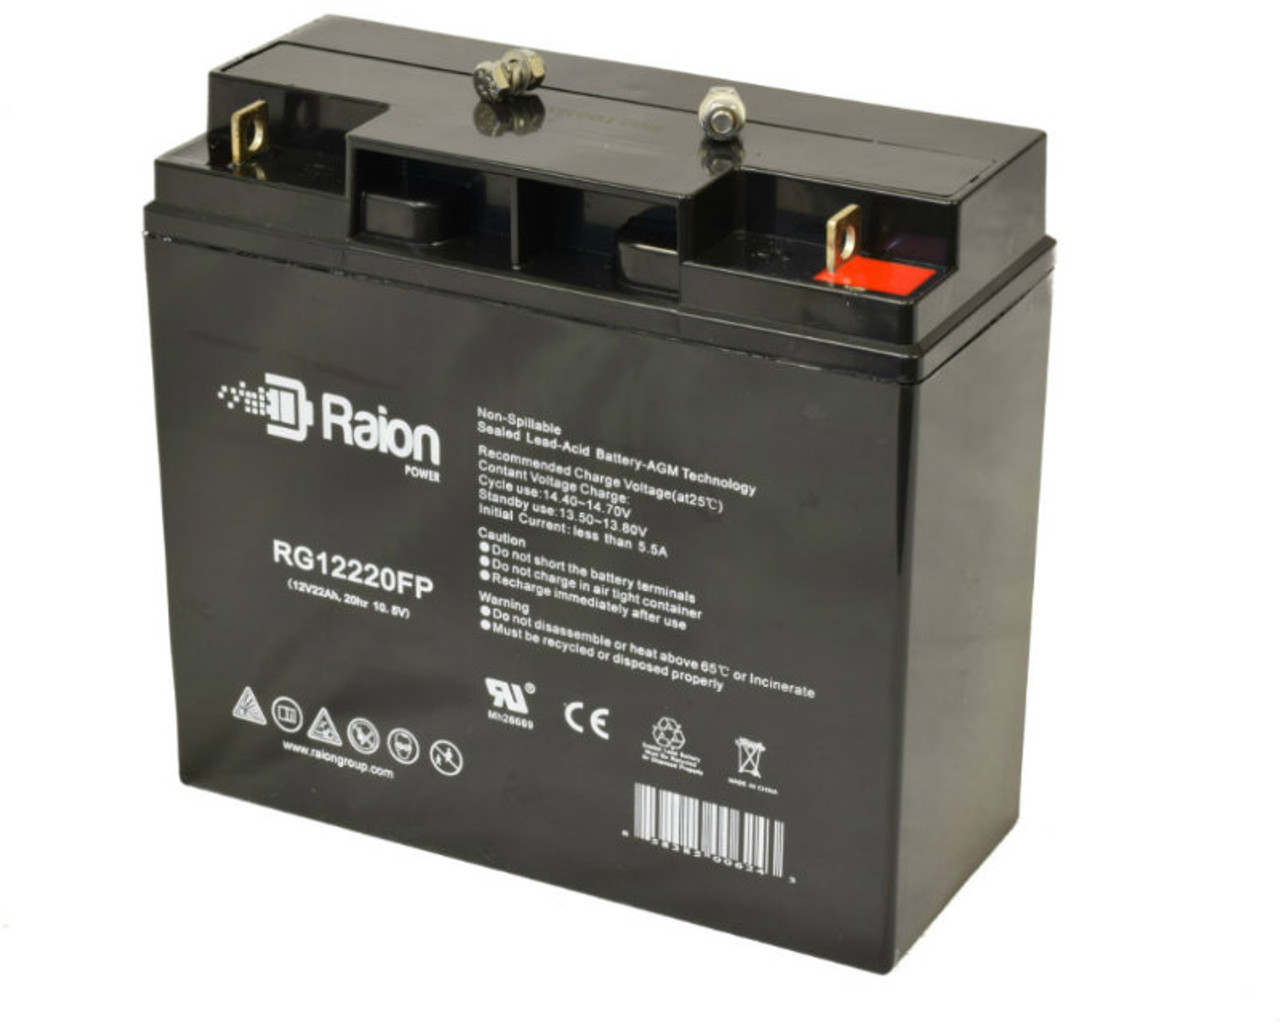 Raion Power RG12220FP 12V 22Ah Lead Acid Battery for Henglypower HL12220